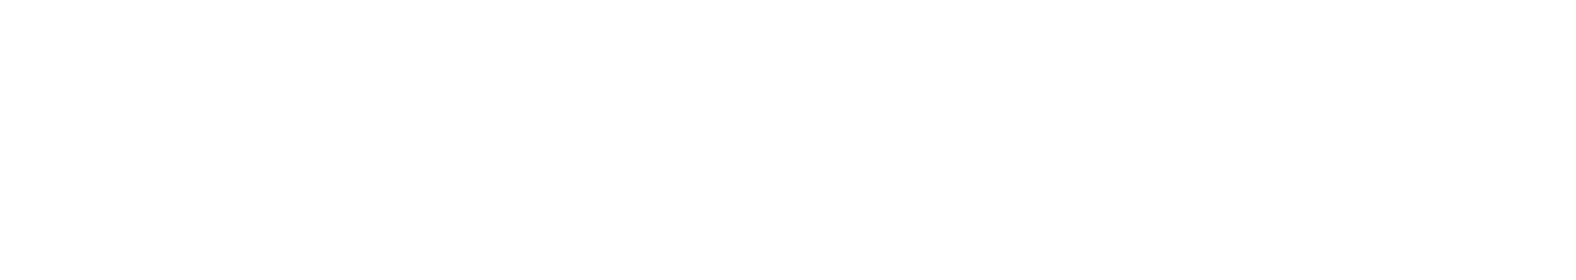 Bio-Techne logo large for dark backgrounds (transparent PNG)